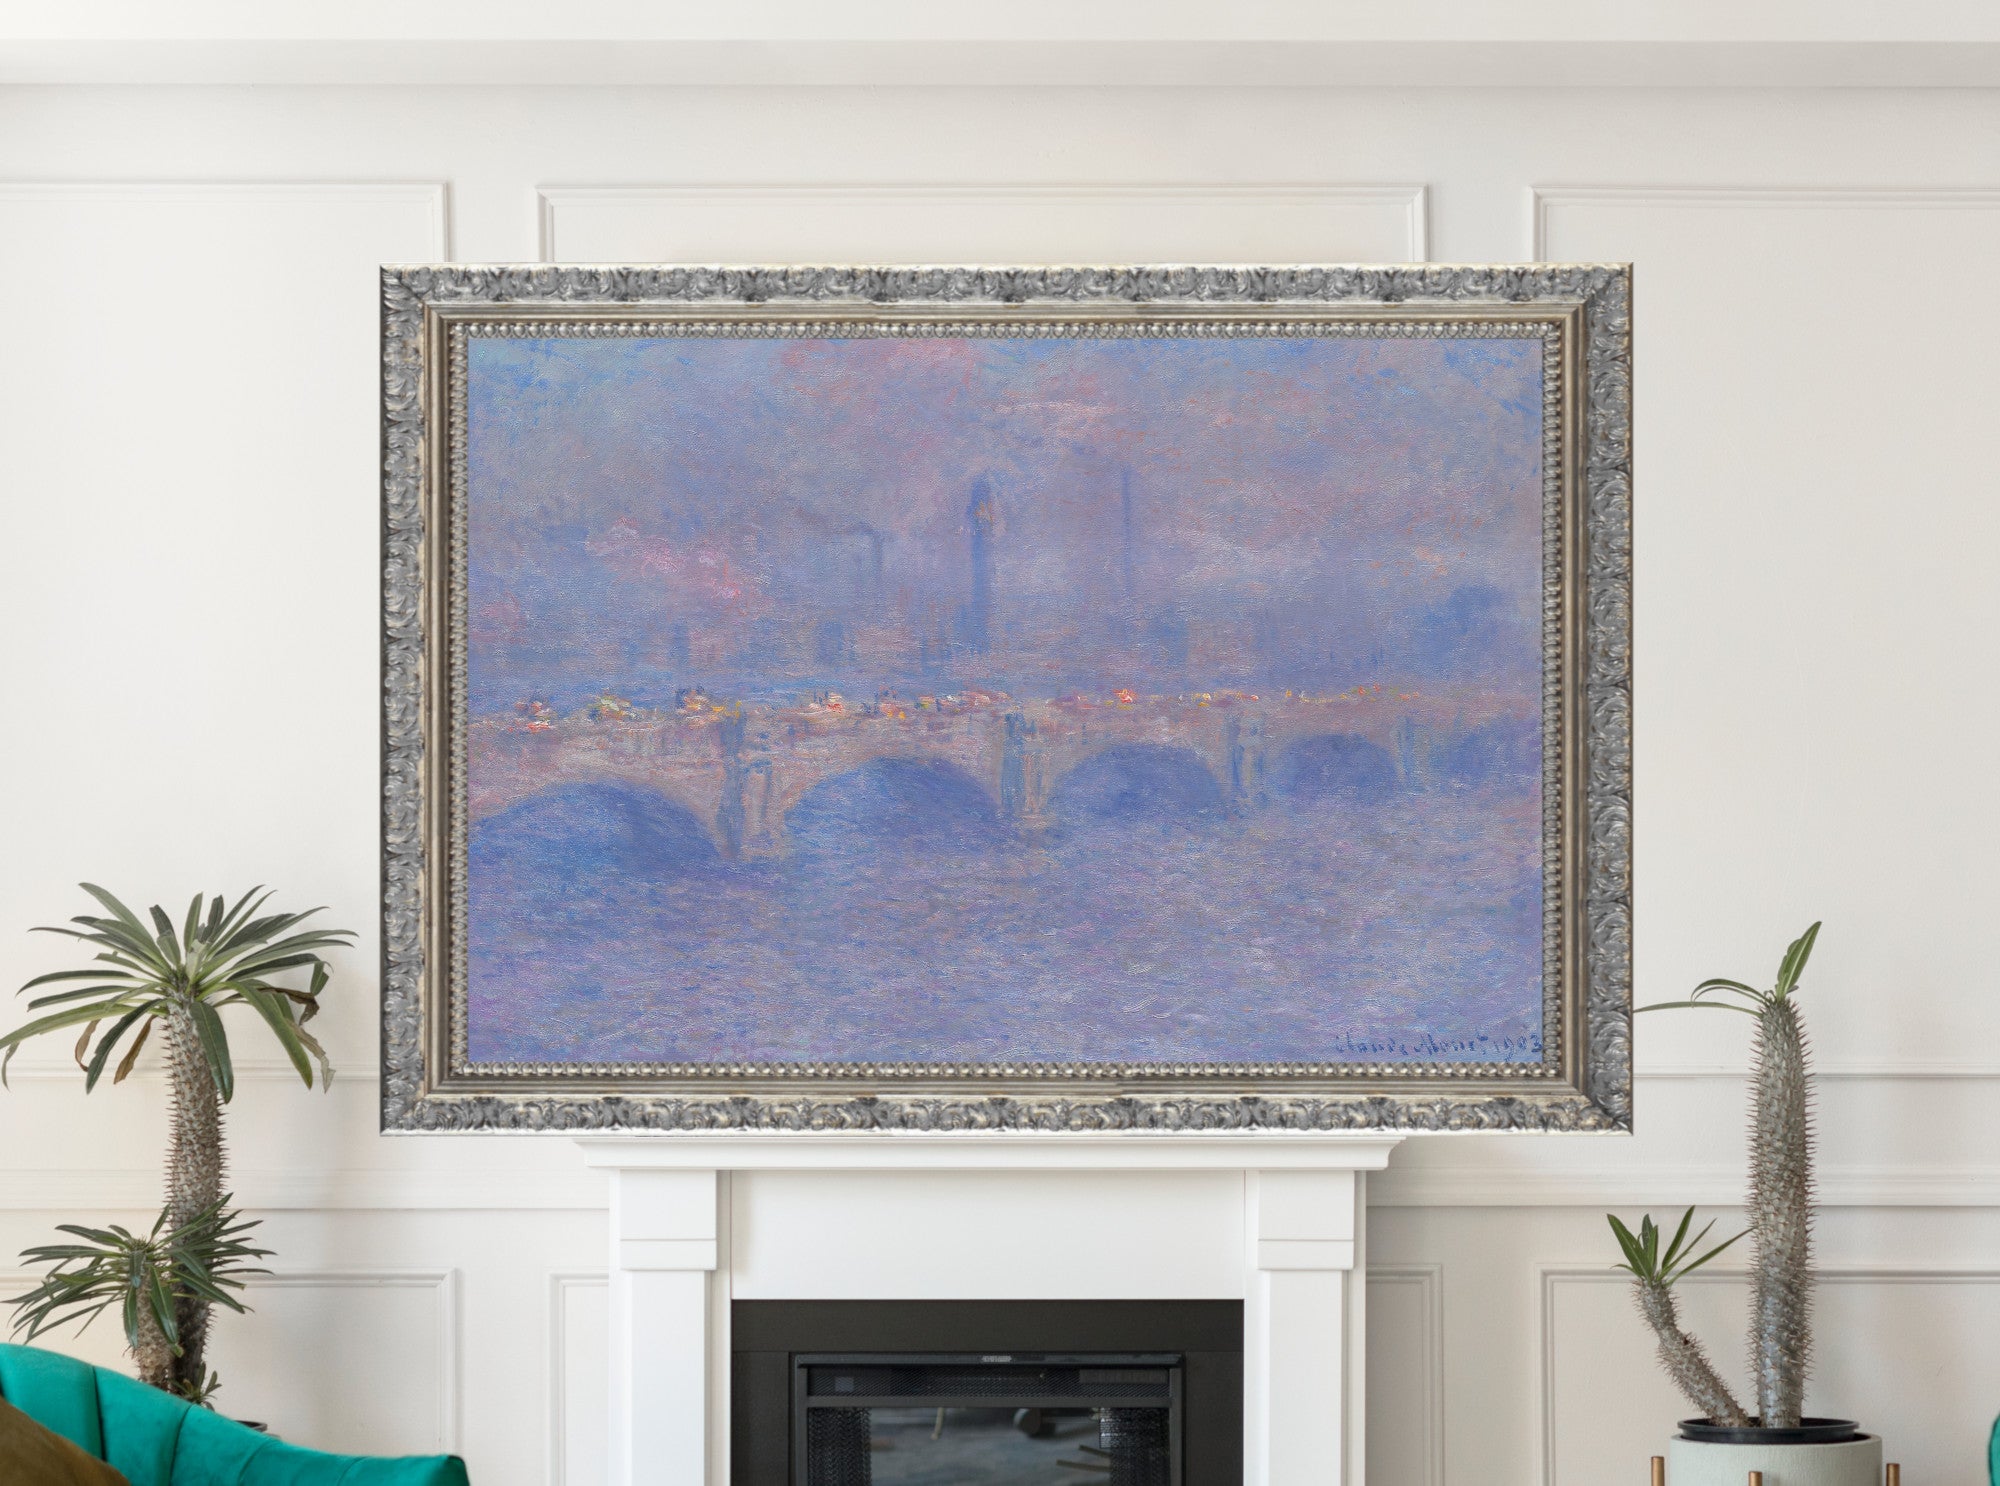 Waterloo Bridge, Sunlight Effect, Claude Monet, Gallery Quality Canvas Reproduction